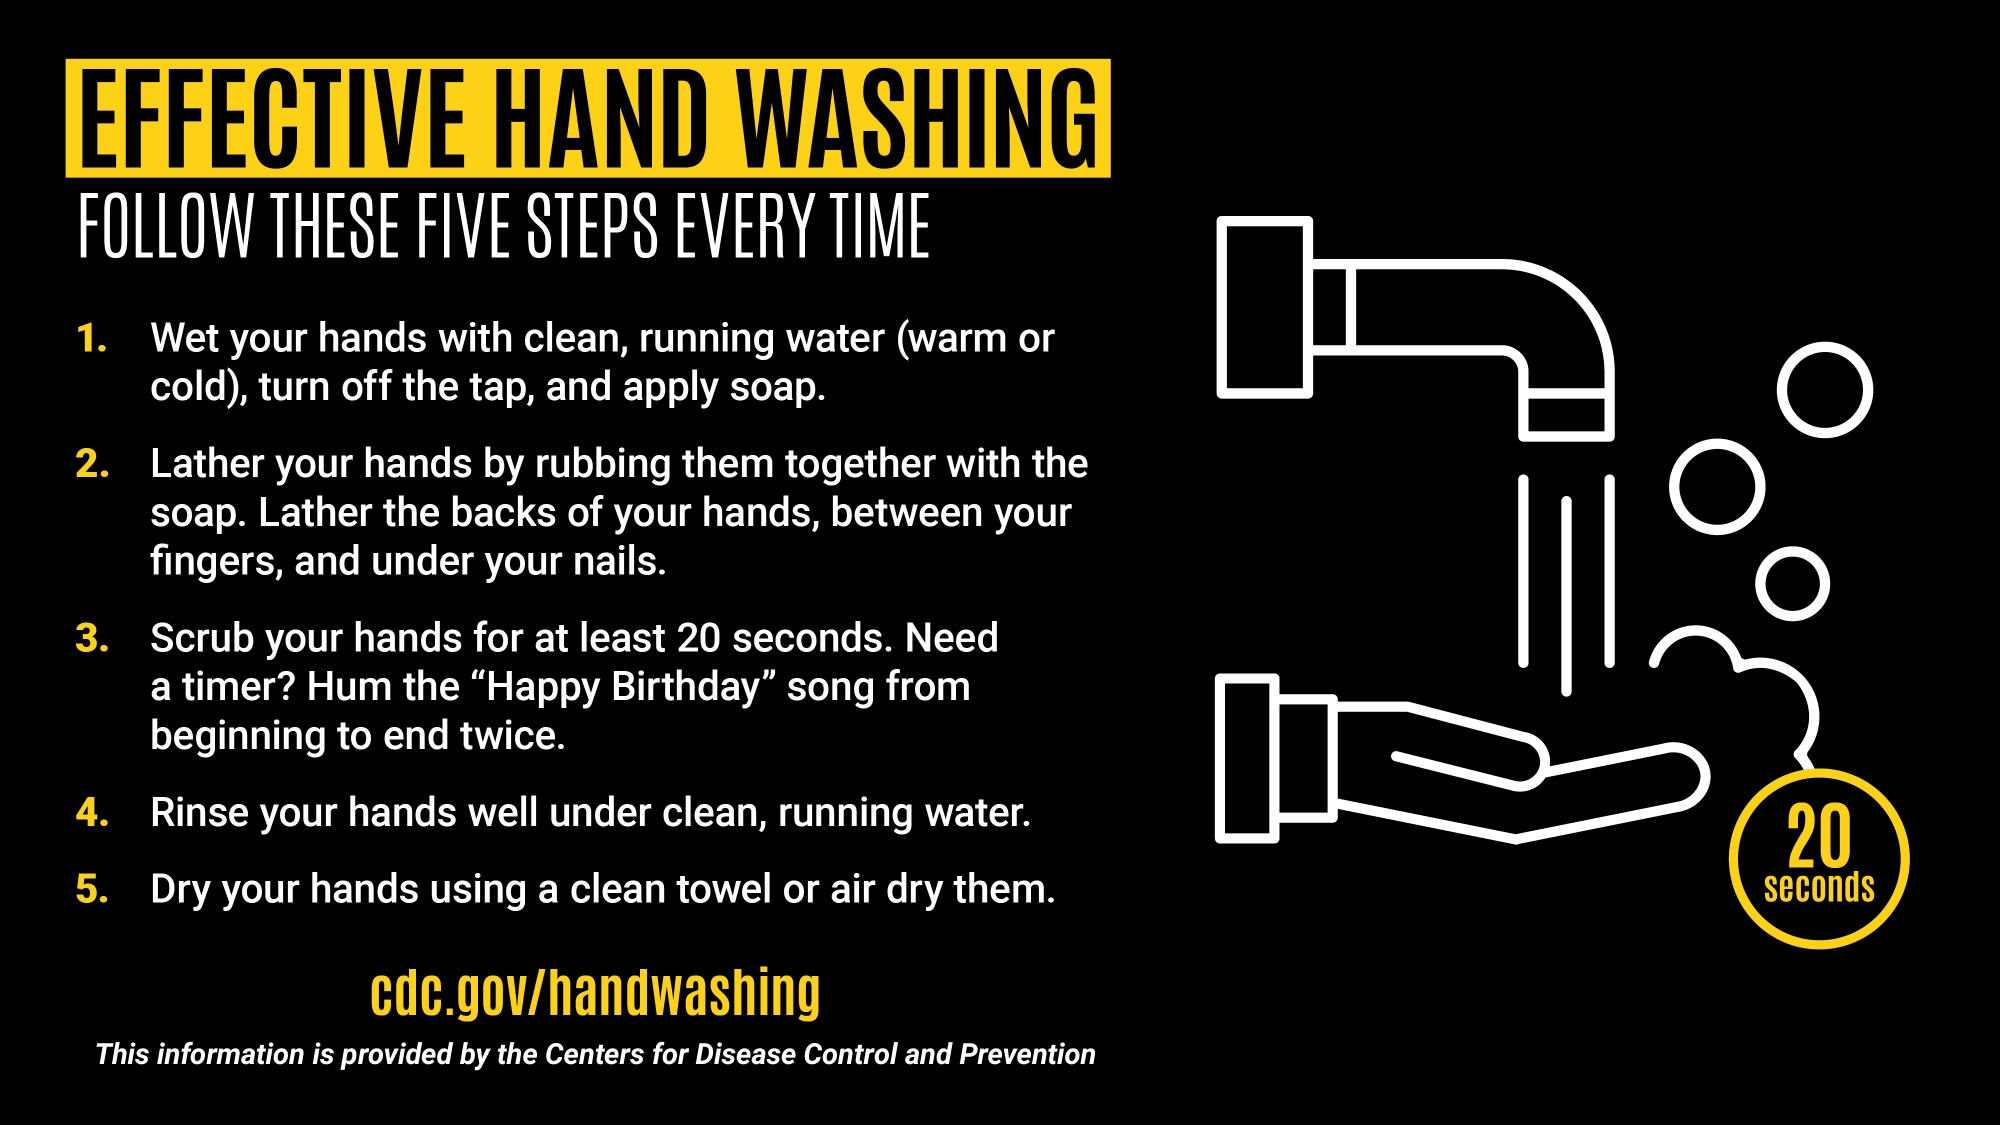 For effective hand washing techniques visit cdc.gov/handwashing